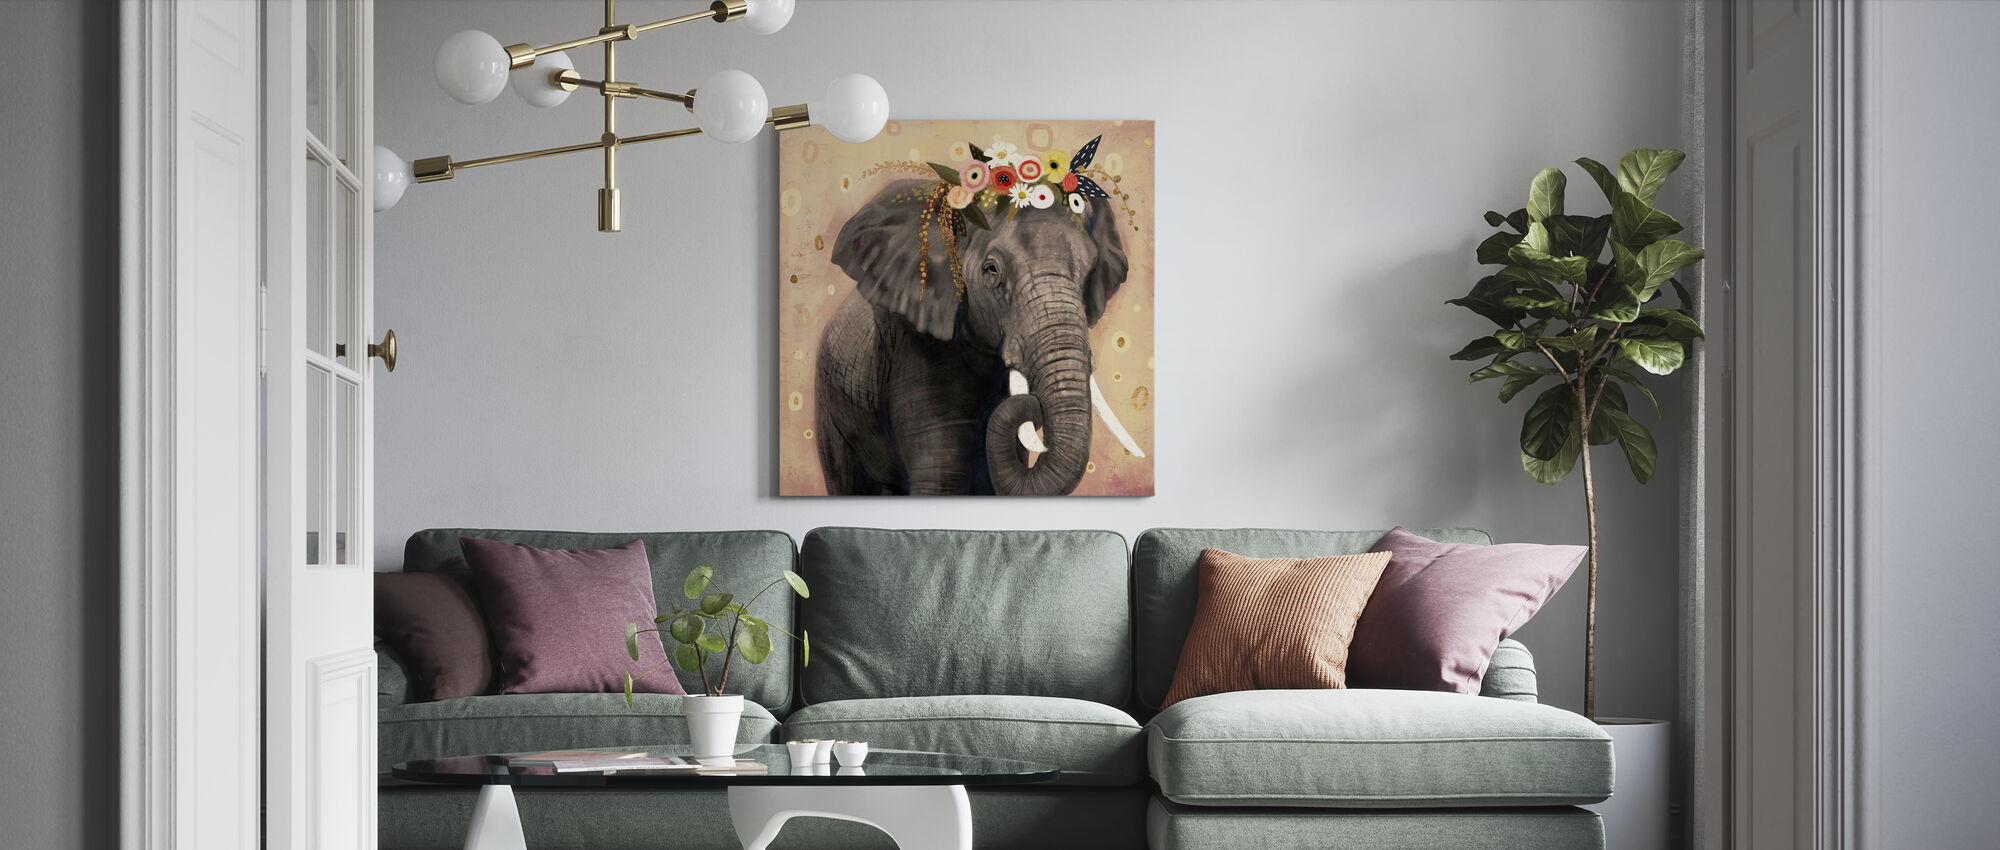 Klimt Elephant - ordina una stampa su tela online - Photowall